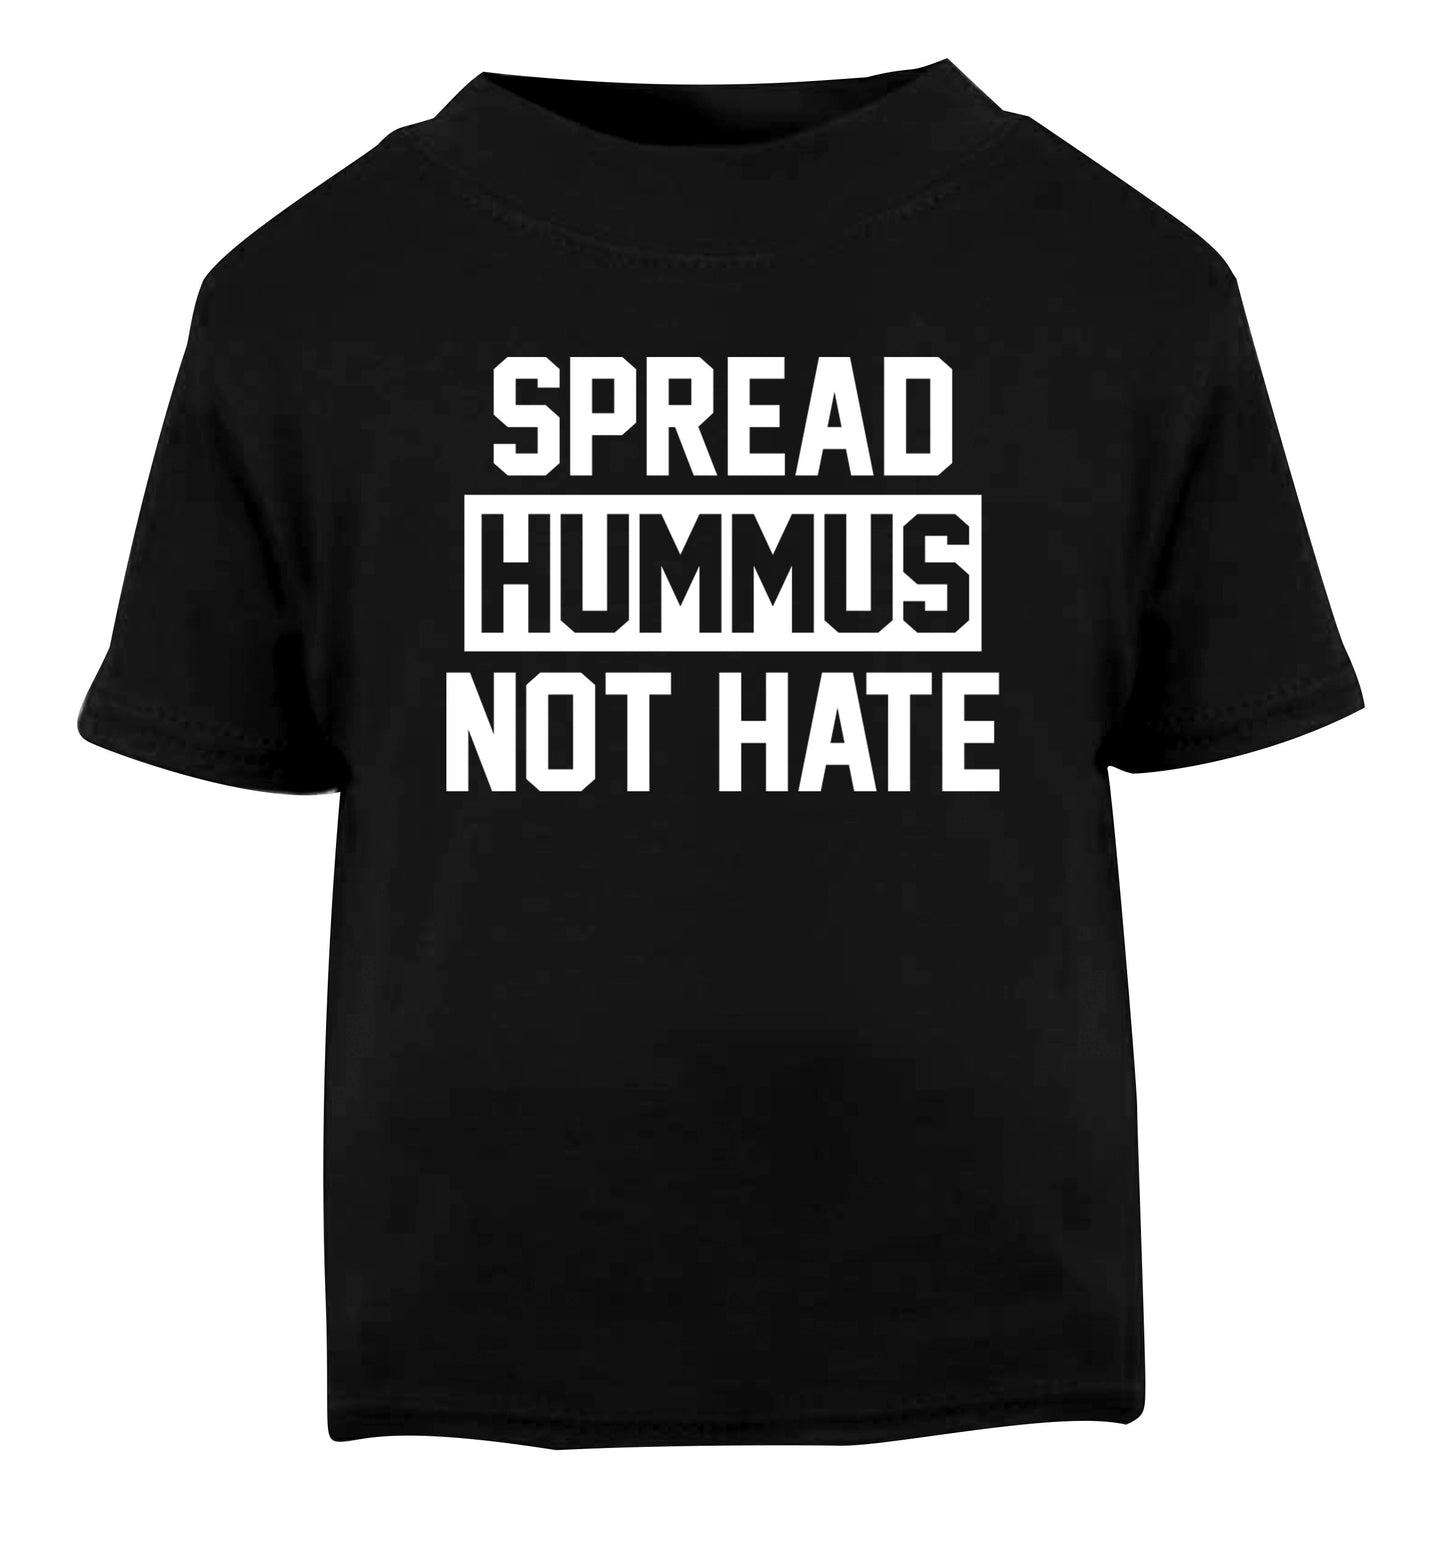 Spread hummus not hate Black Baby Toddler Tshirt 2 years